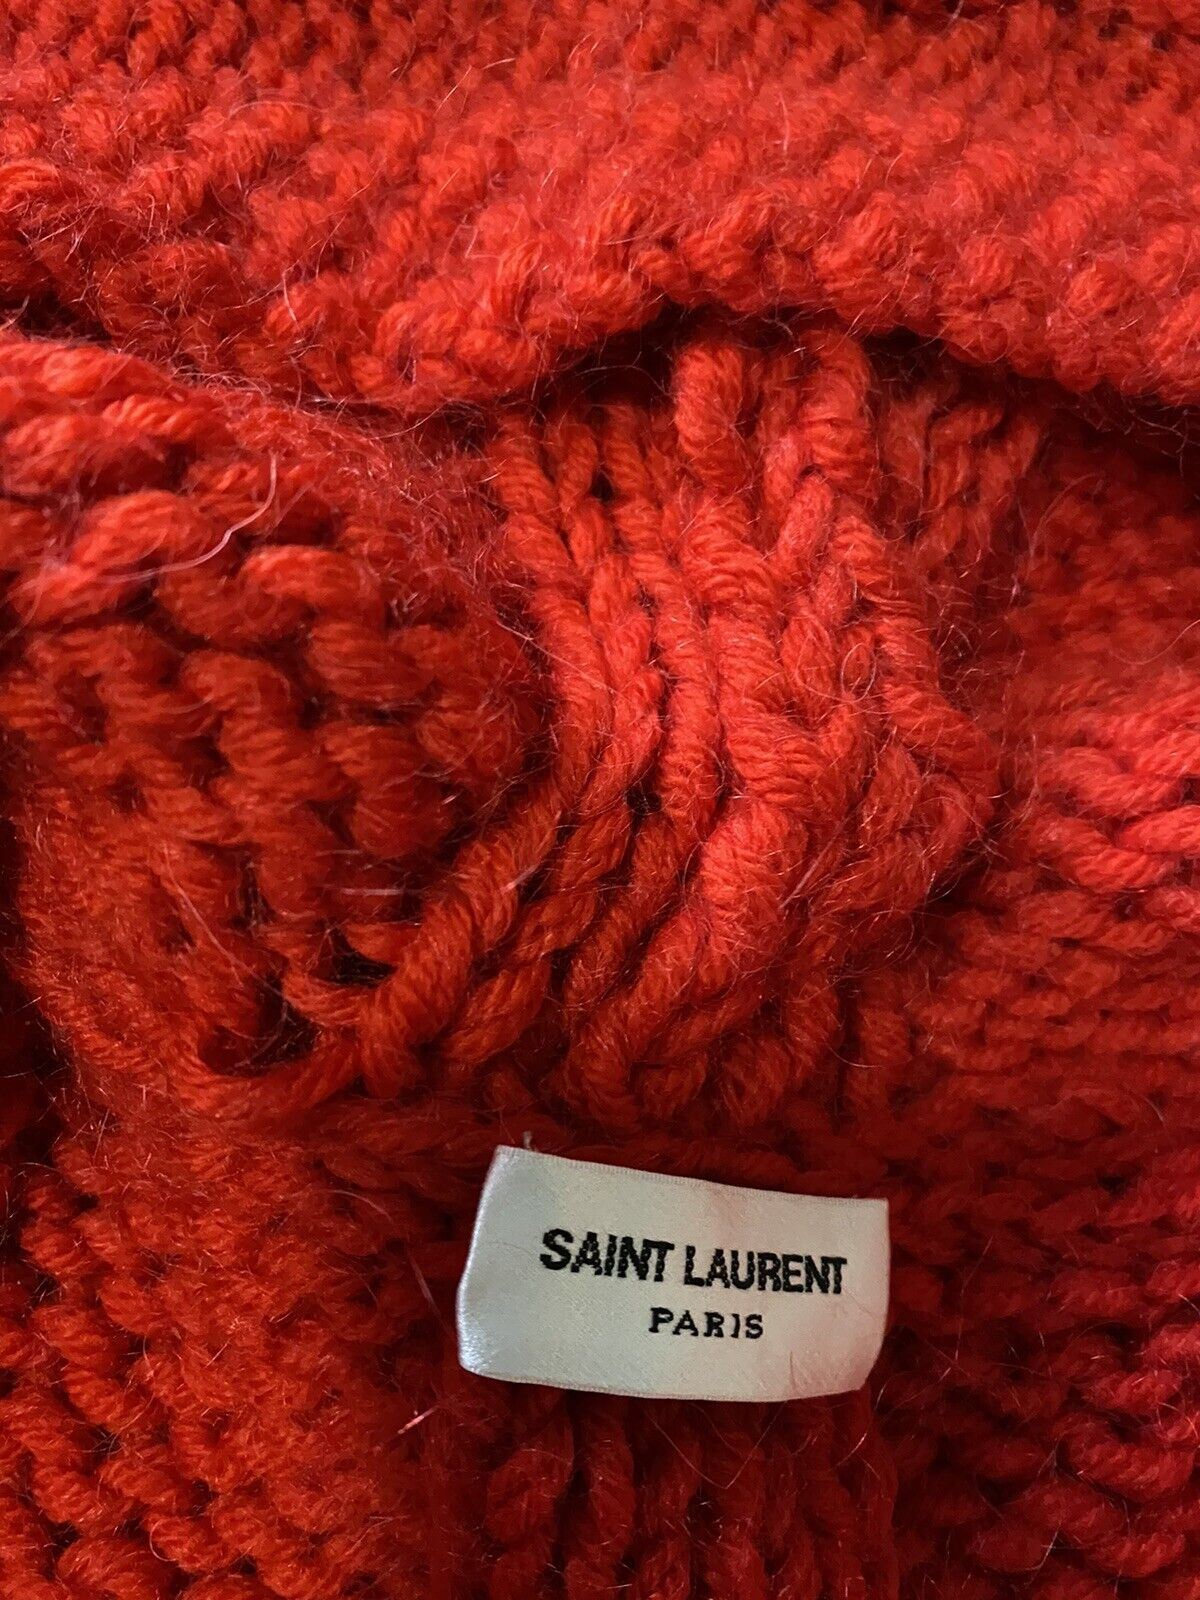 Neu mit Etikett: 1190 $ Saint Laurent Herren-Cardigan mit Kapuze, Coble-Strick, Rot, S, Italien